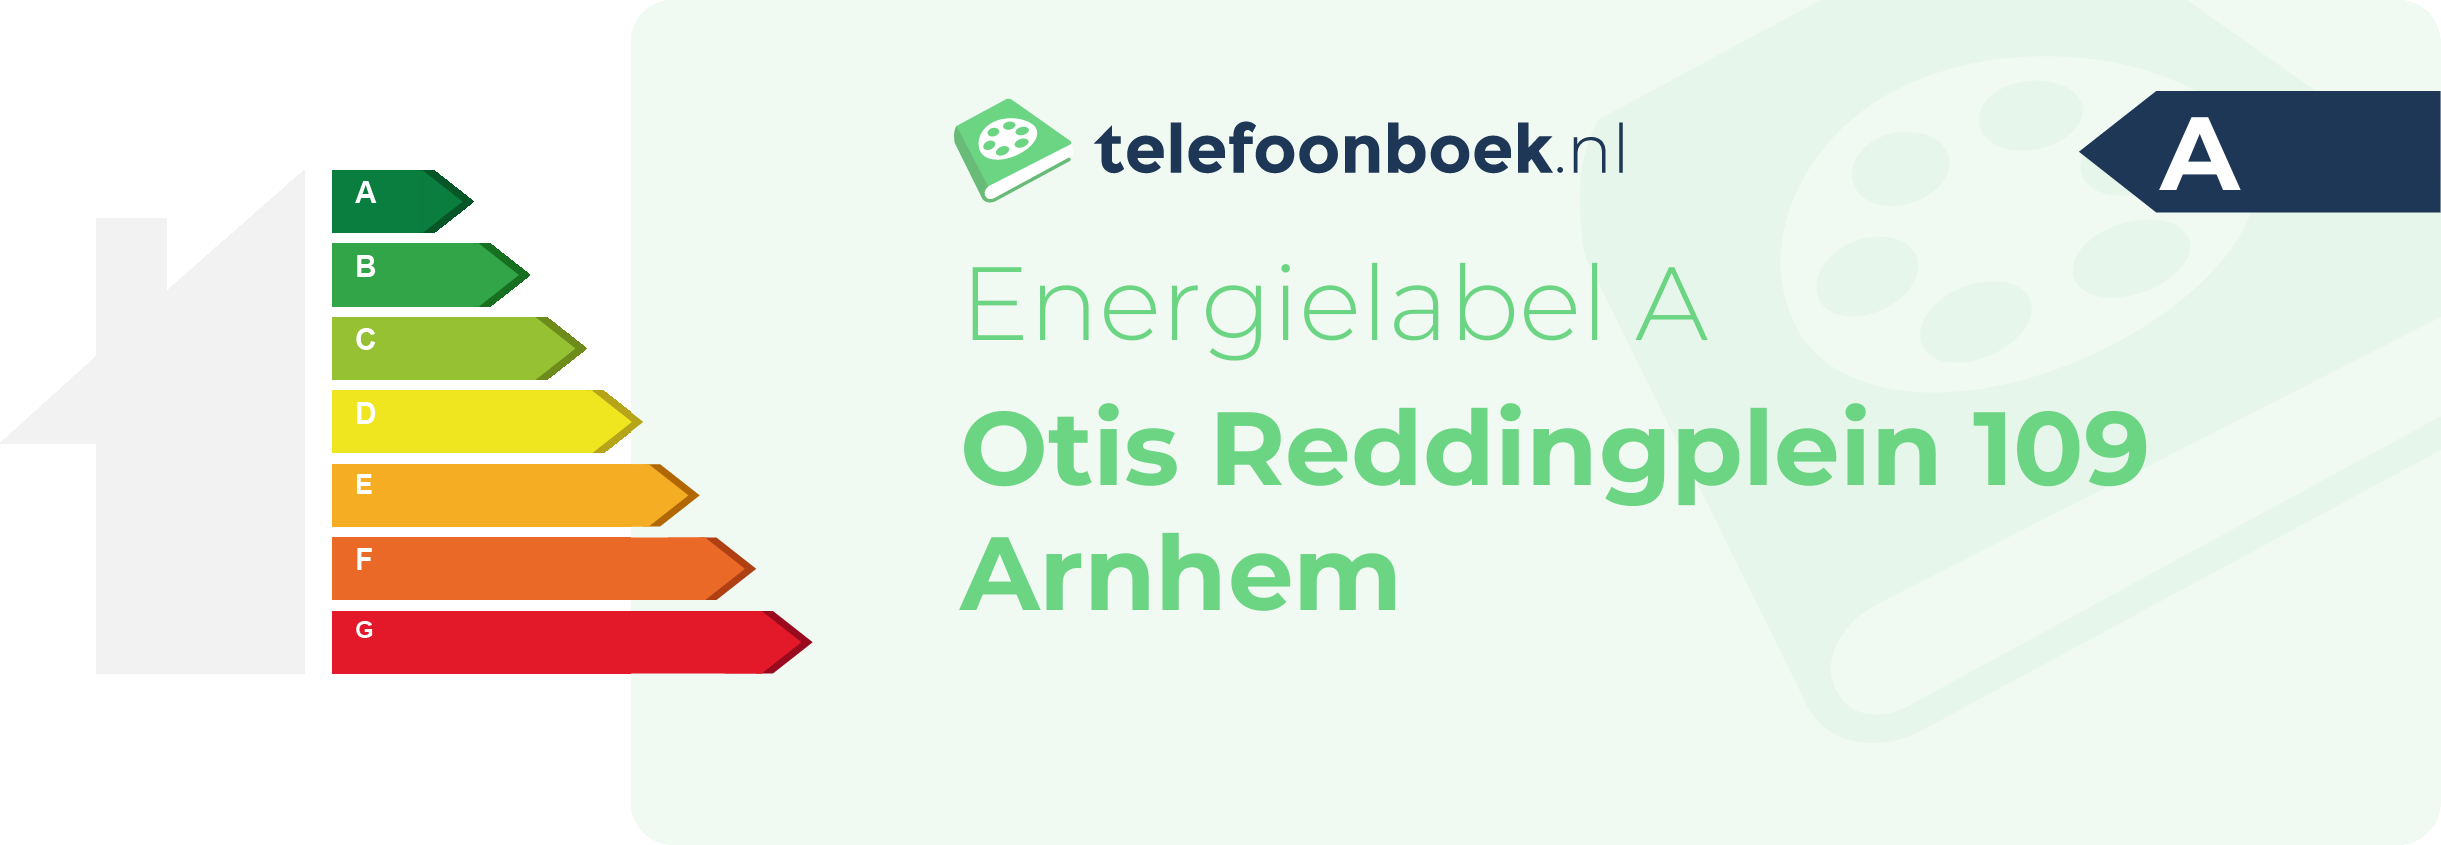 Energielabel Otis Reddingplein 109 Arnhem